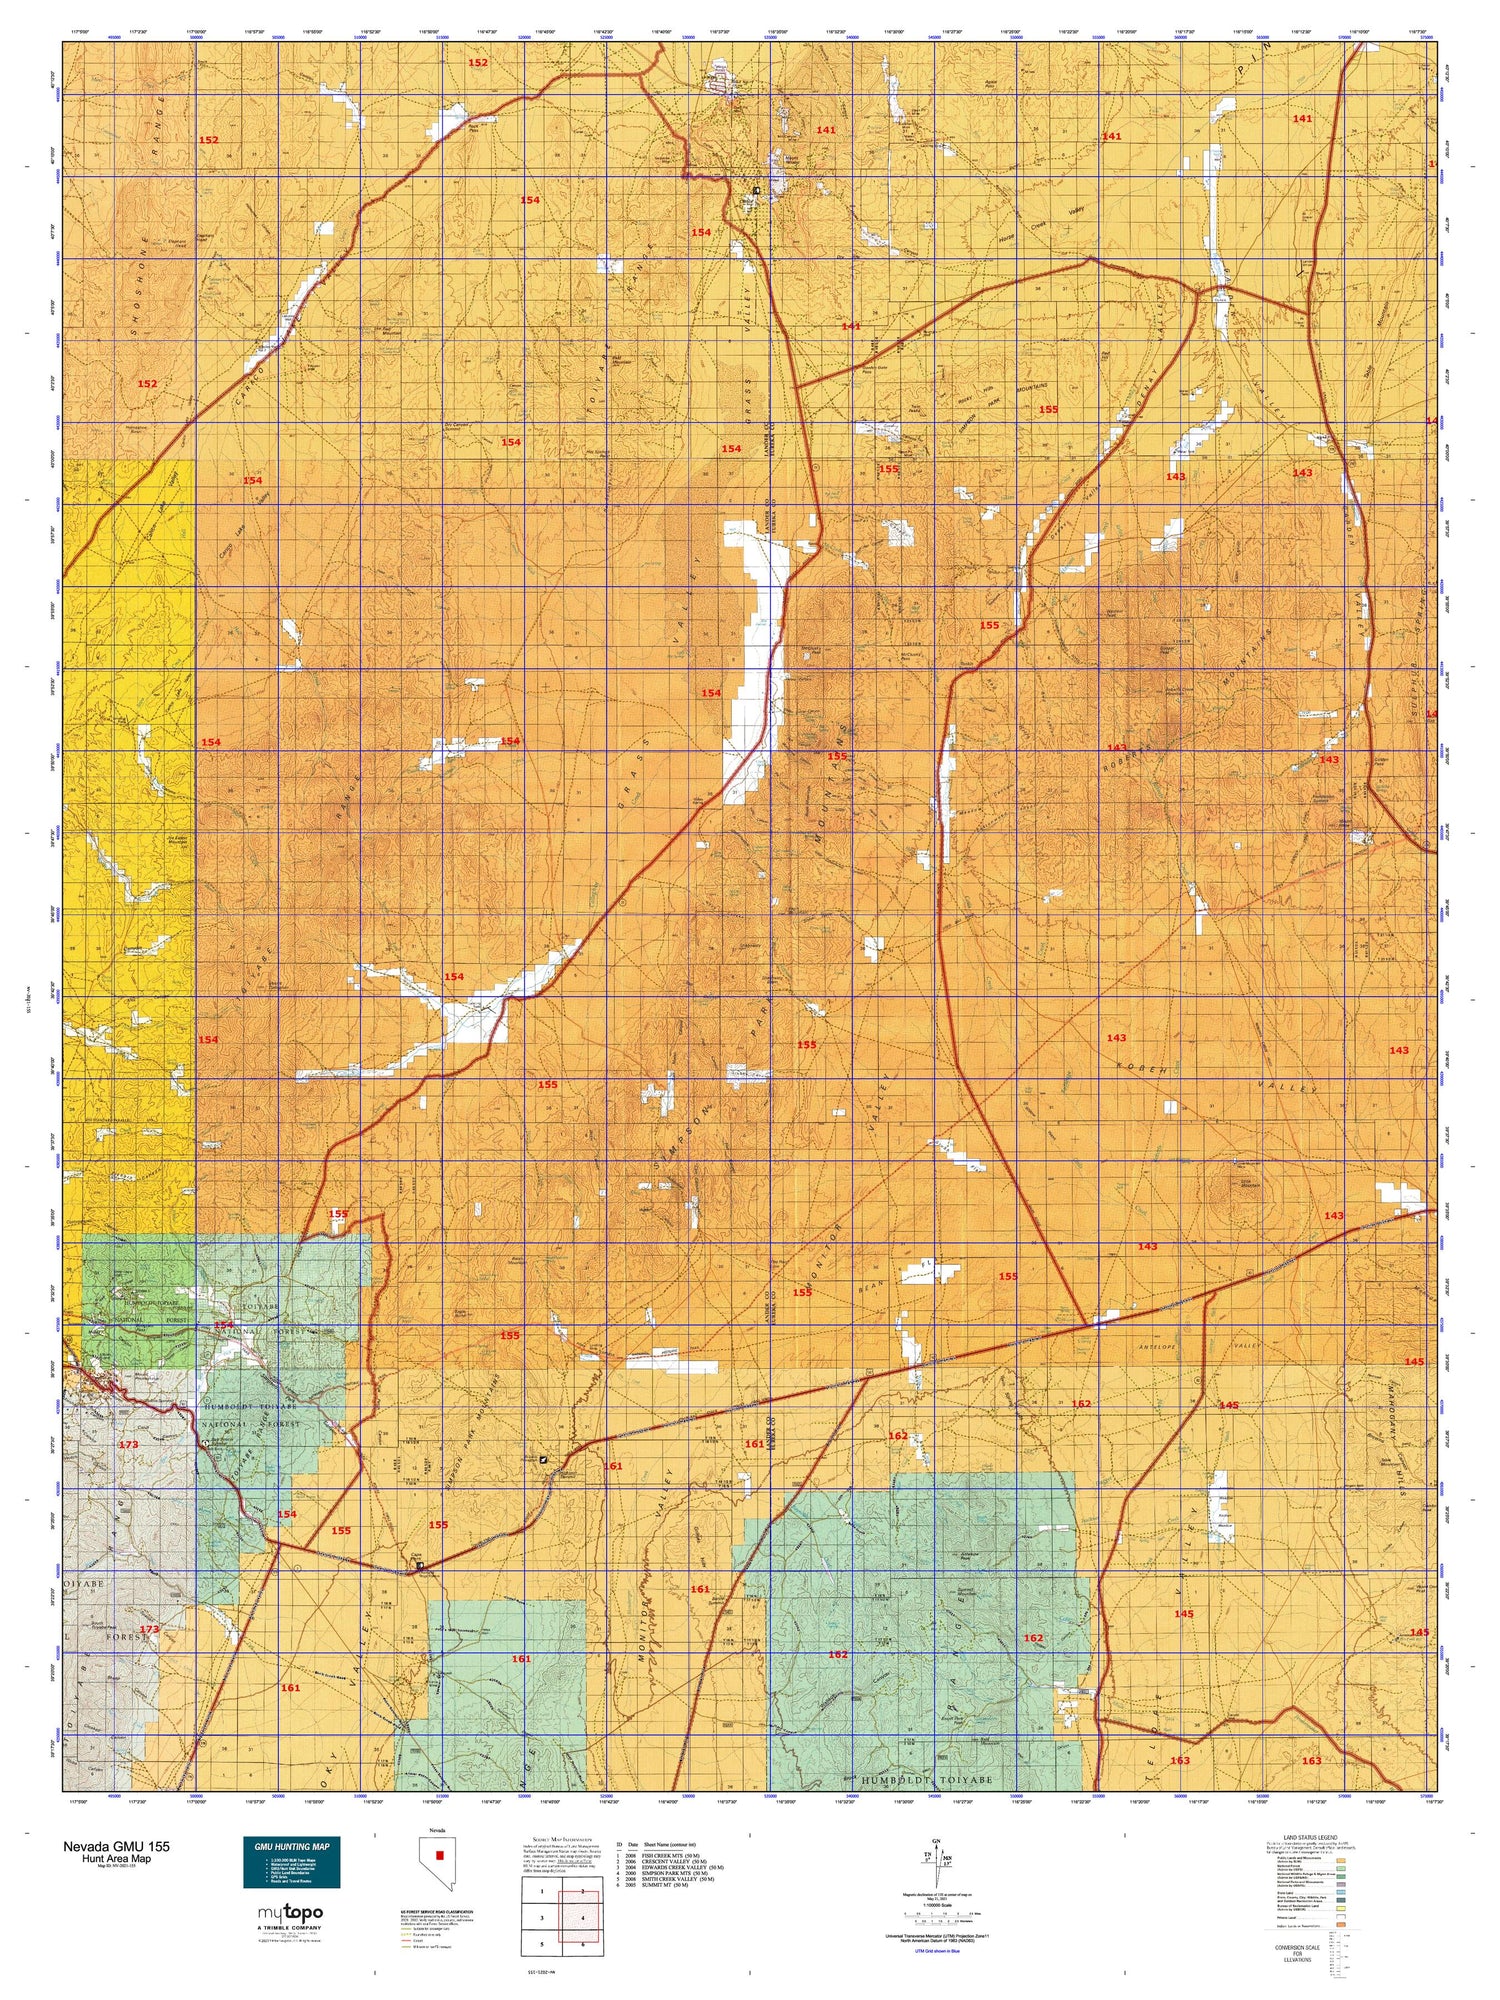 Nevada GMU 155 Map Image